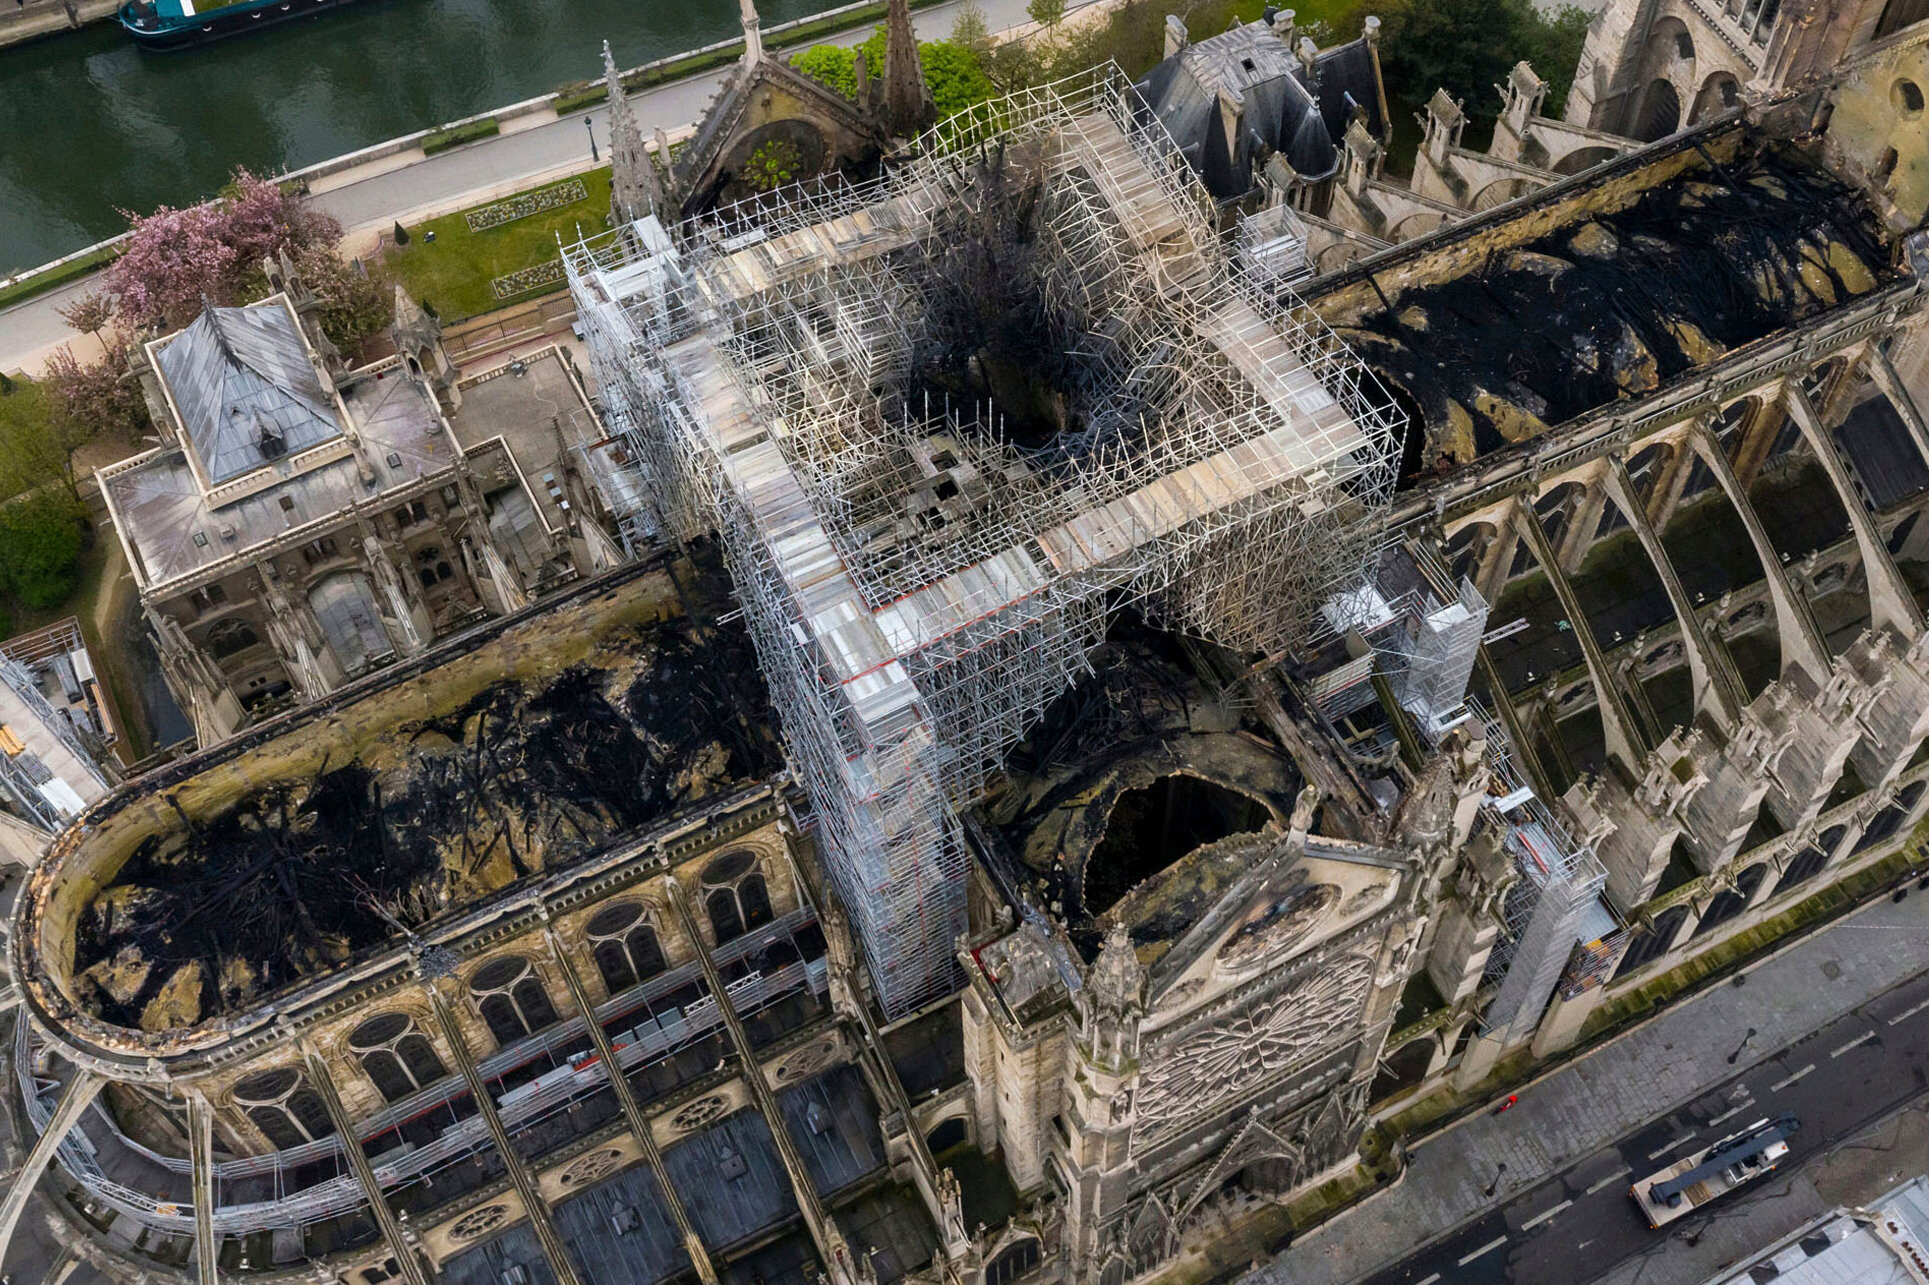 More information about "Η ανακατασκευή της Παναγίας των Παρισίων δύο χρόνια μετά την πυρκαγιά"